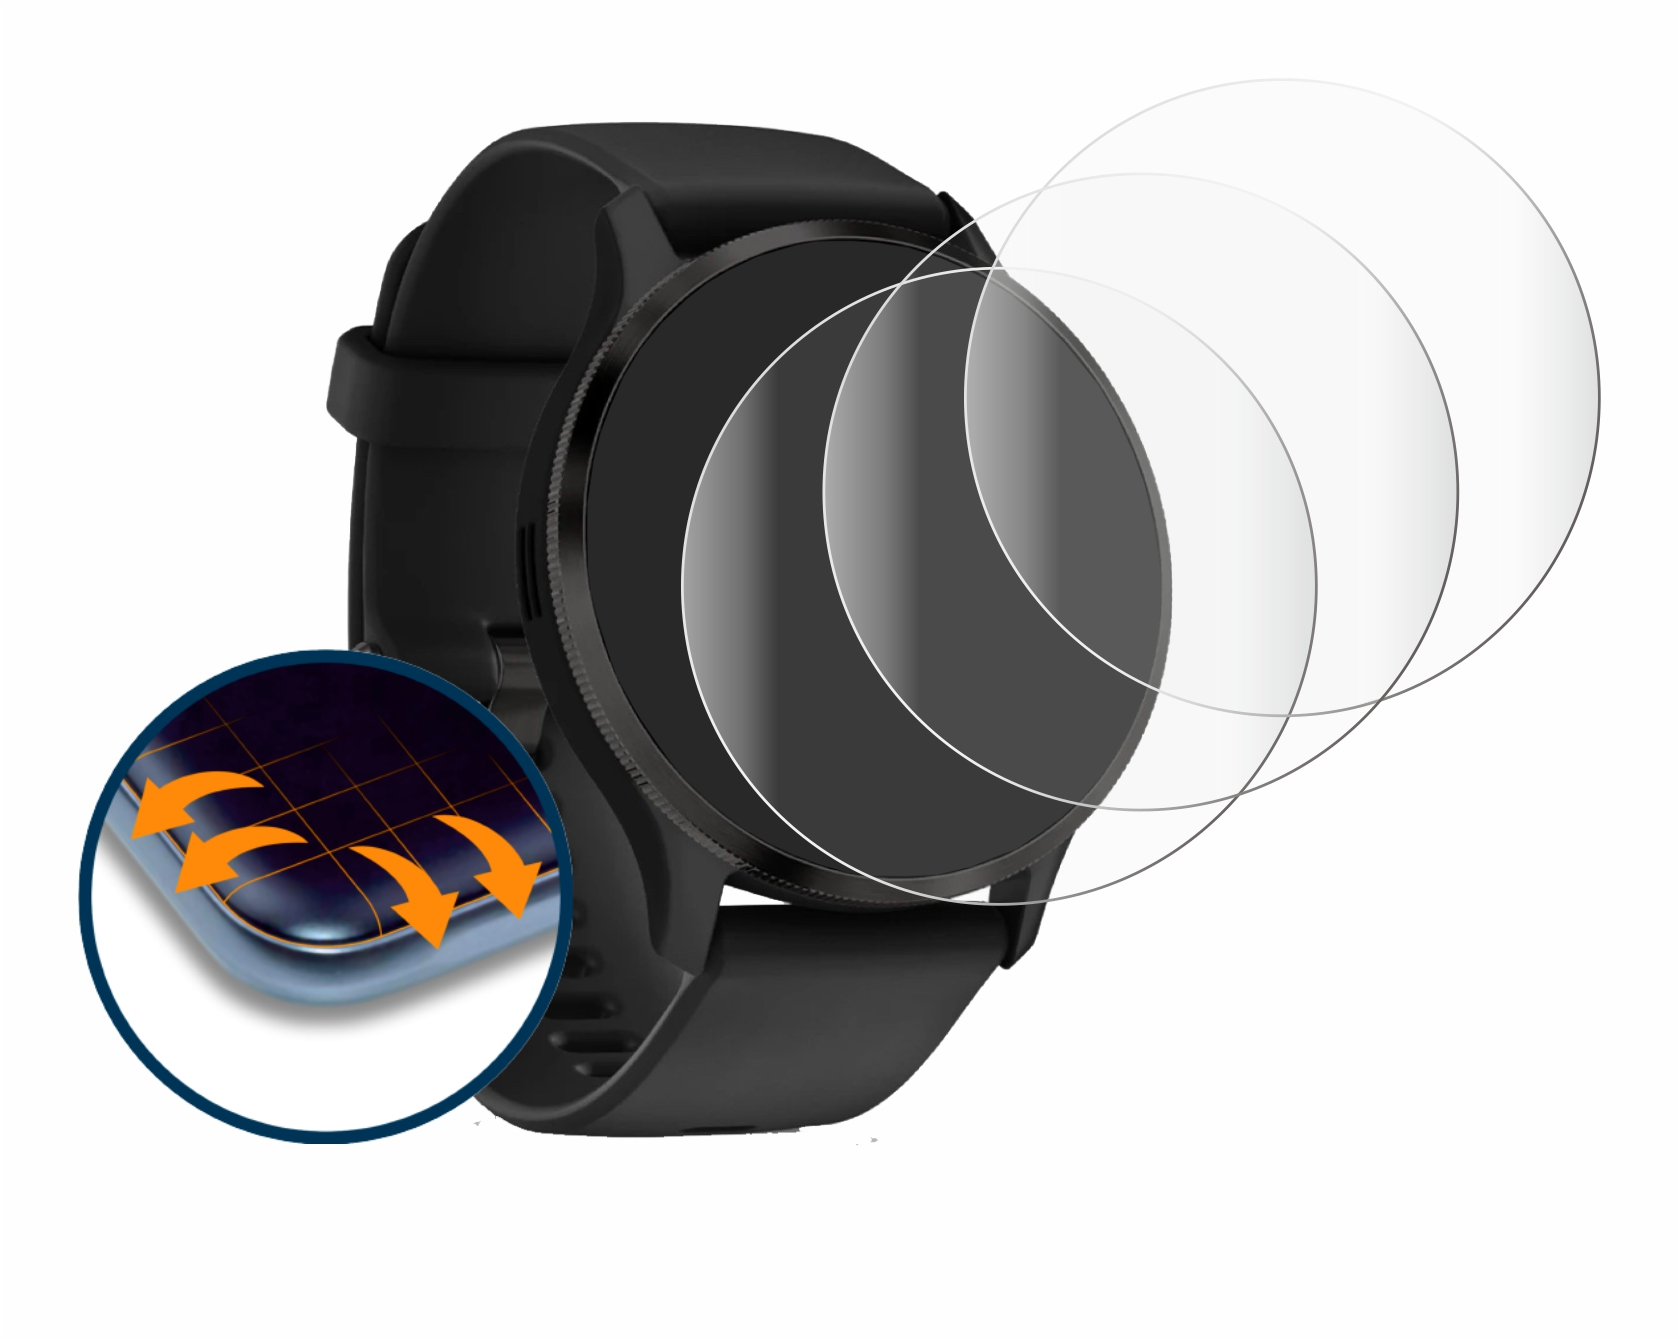 4x Garmin 3S) Flex Venu SAVVIES Curved 3D Schutzfolie(für Full-Cover